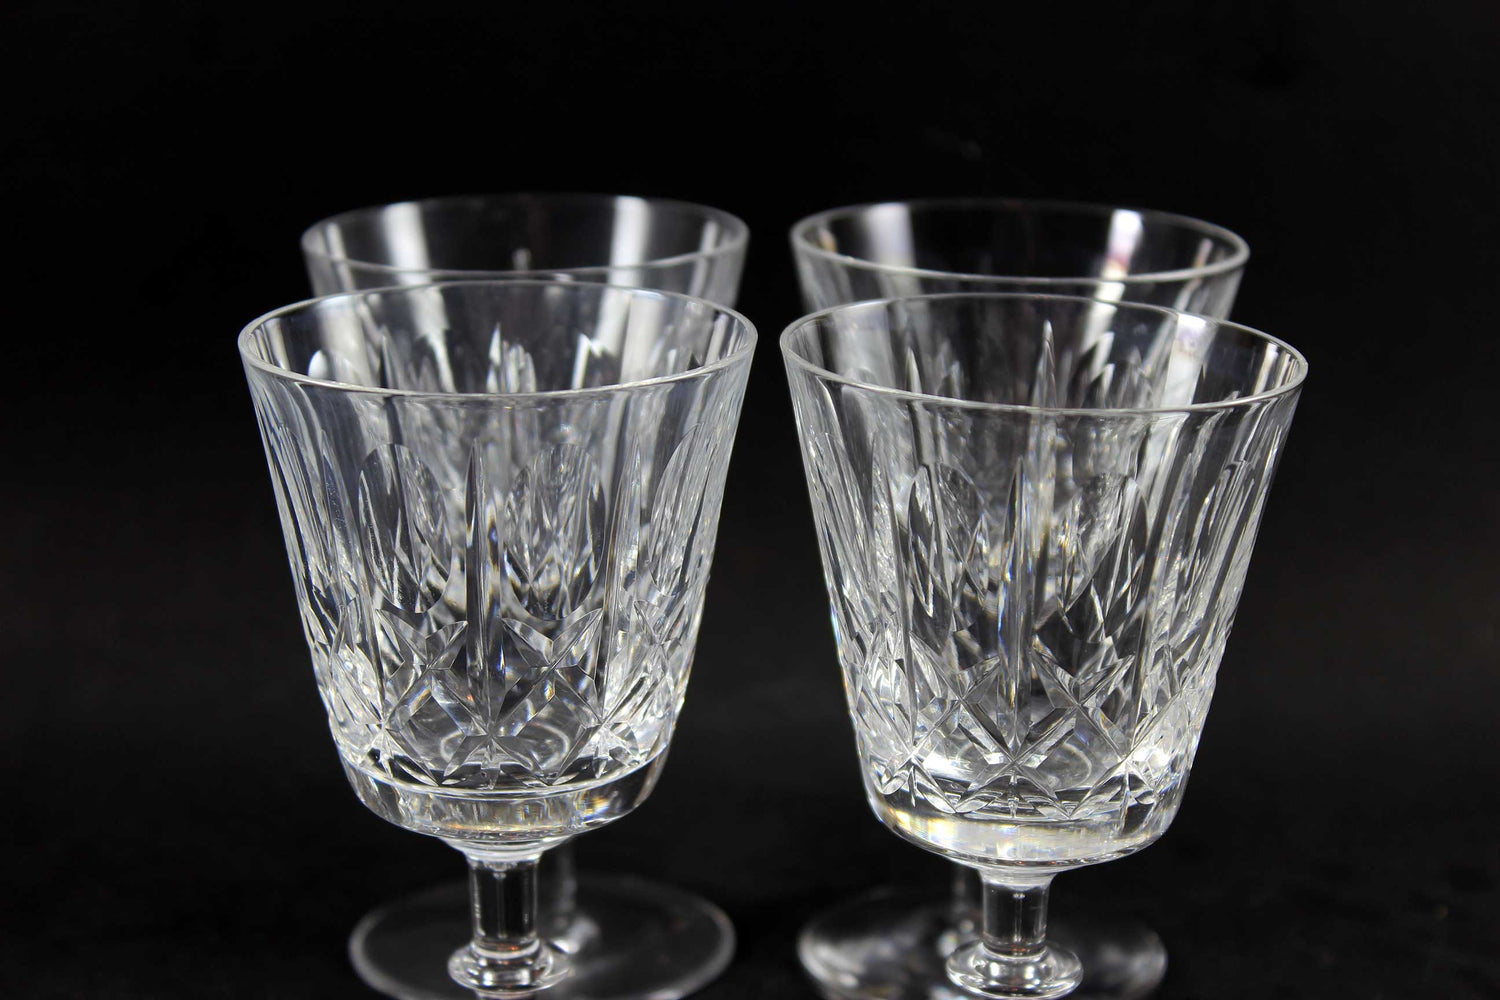 Edinburgh Crystal, Cross and Olive, White Wine Glasses